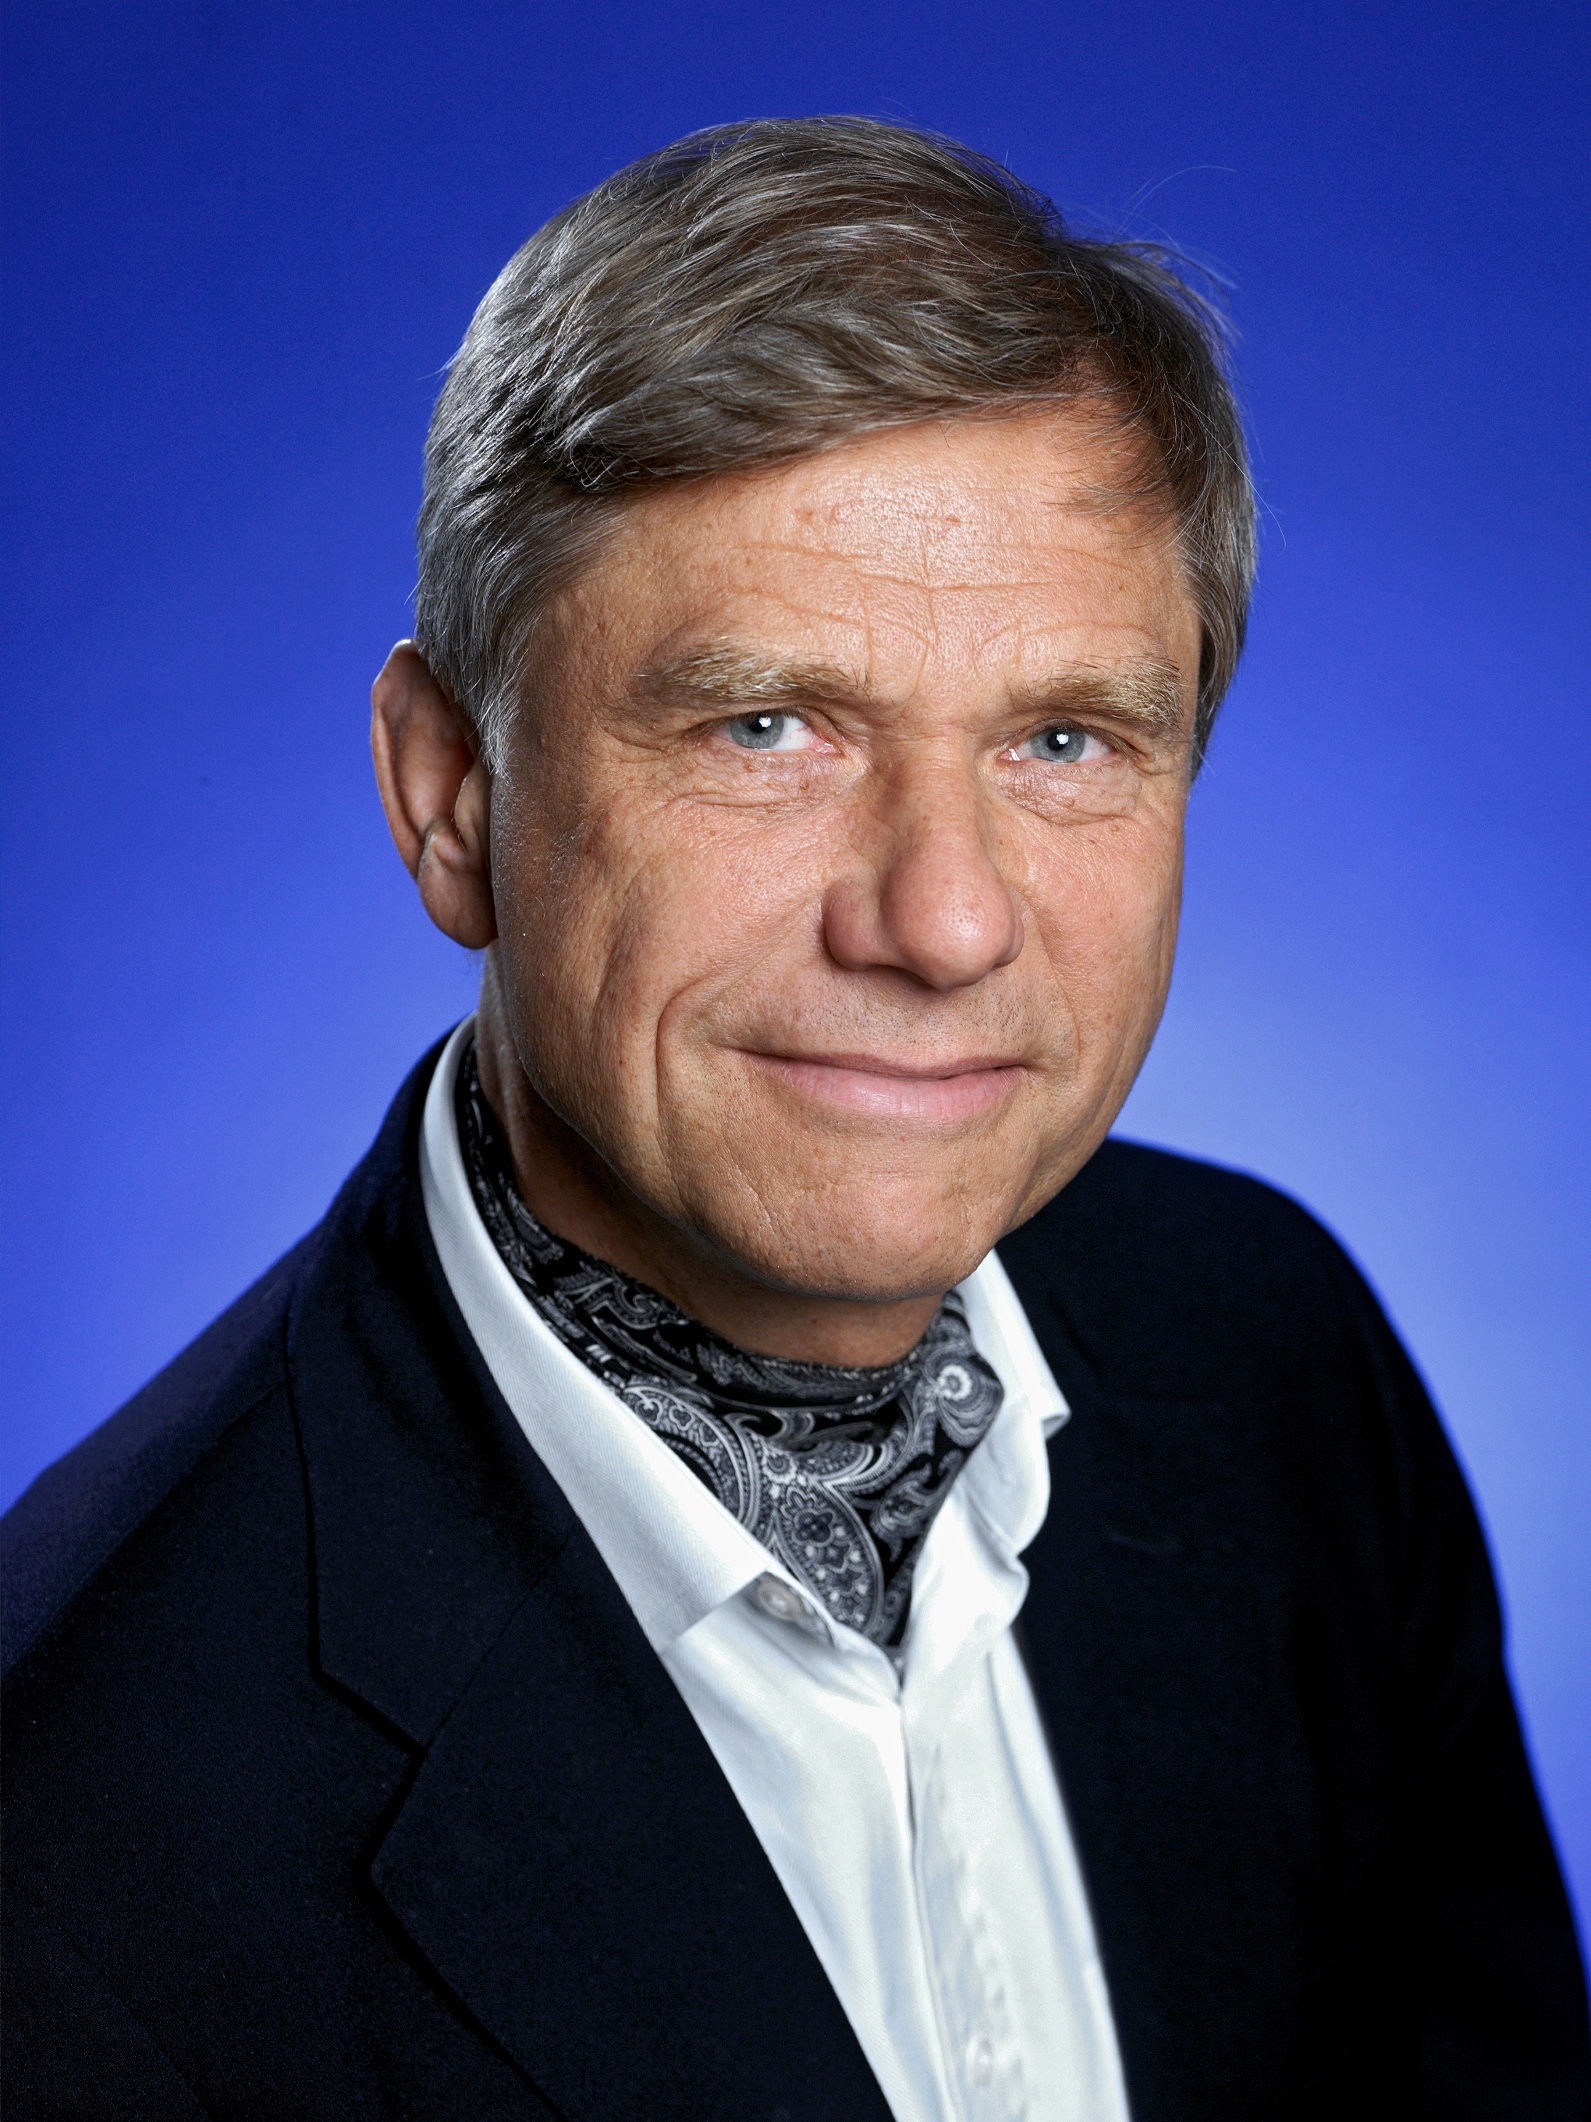 Hermann Hauser, Technology entrepreneur and venture capitalist